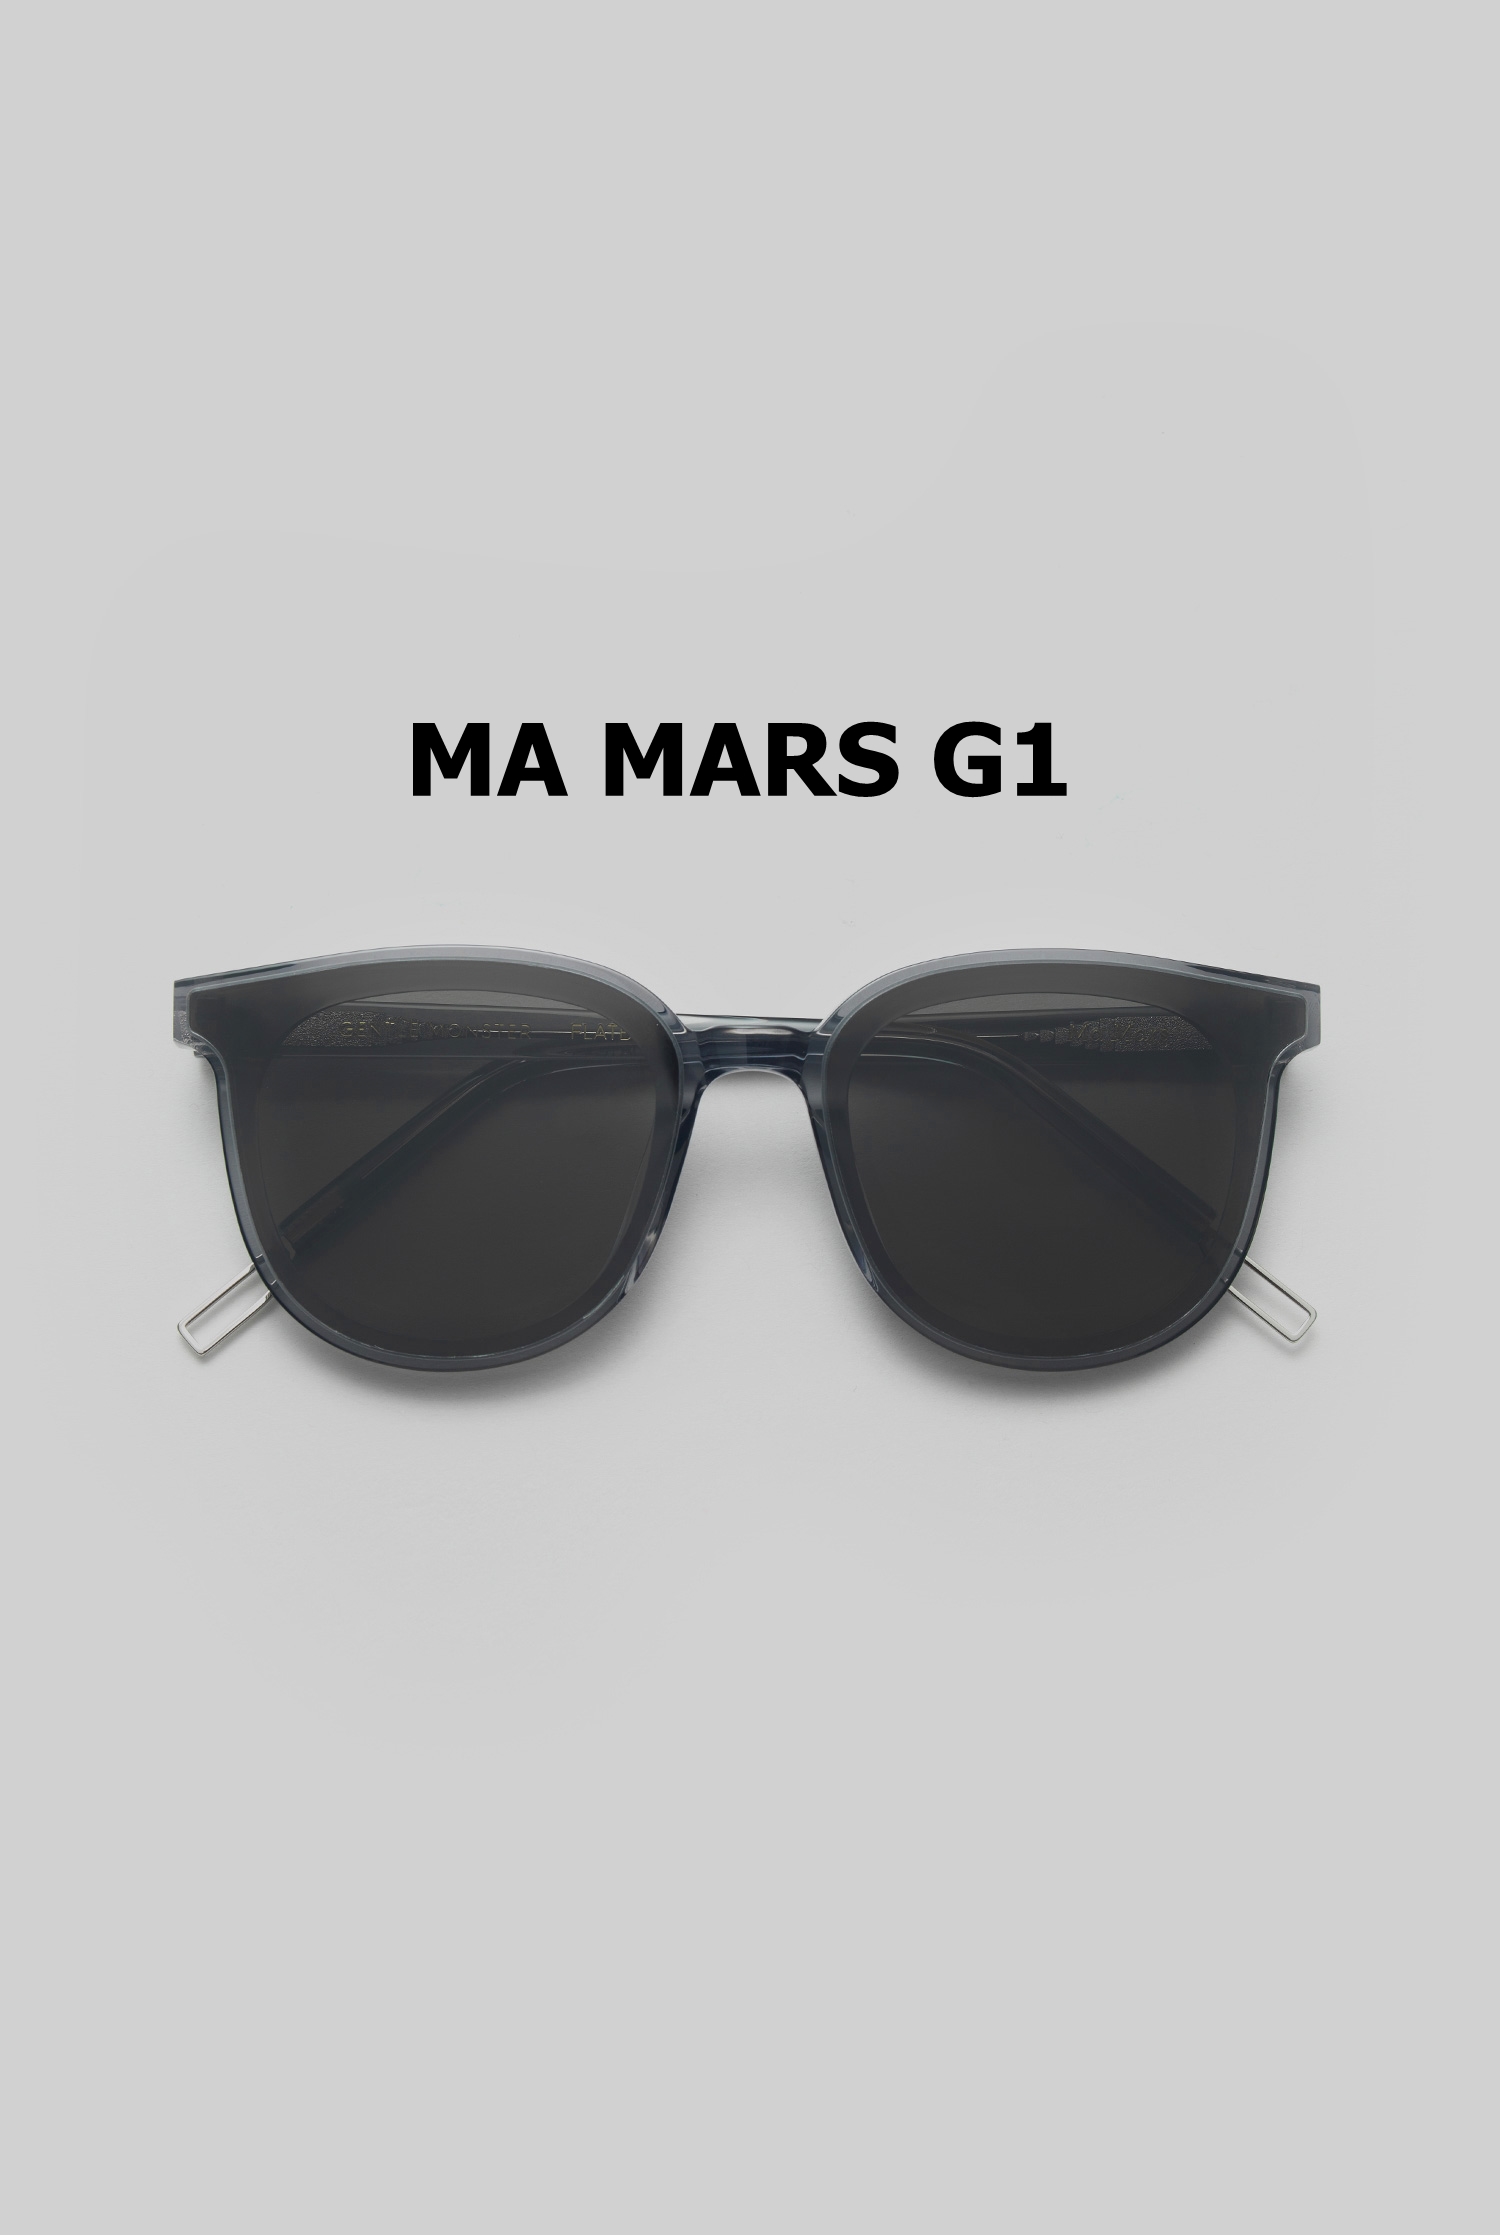 MA MARS G1